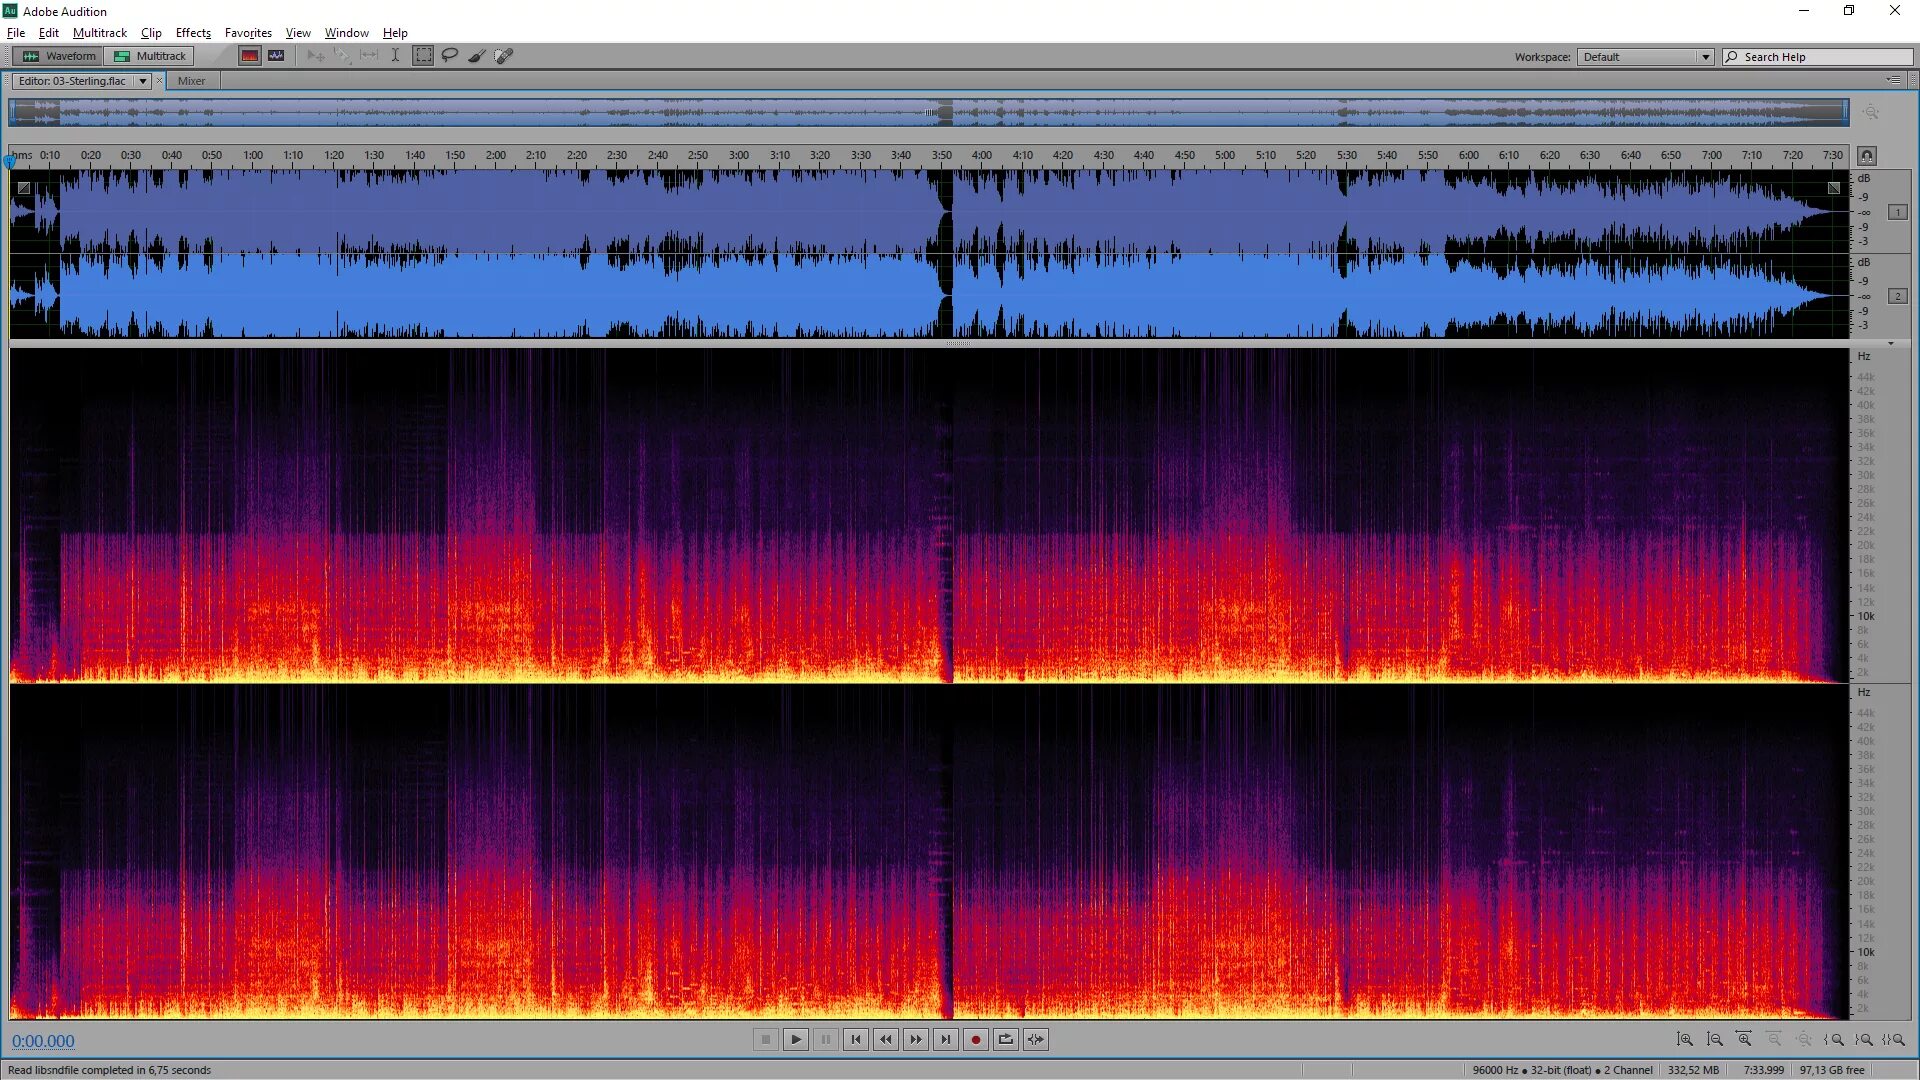 16 бит 24 бит звук. Adobe Audition спектрограмма. Адобе аудитион спектр. Спектрограмма голоса. Спектрограмма радиосигнала.